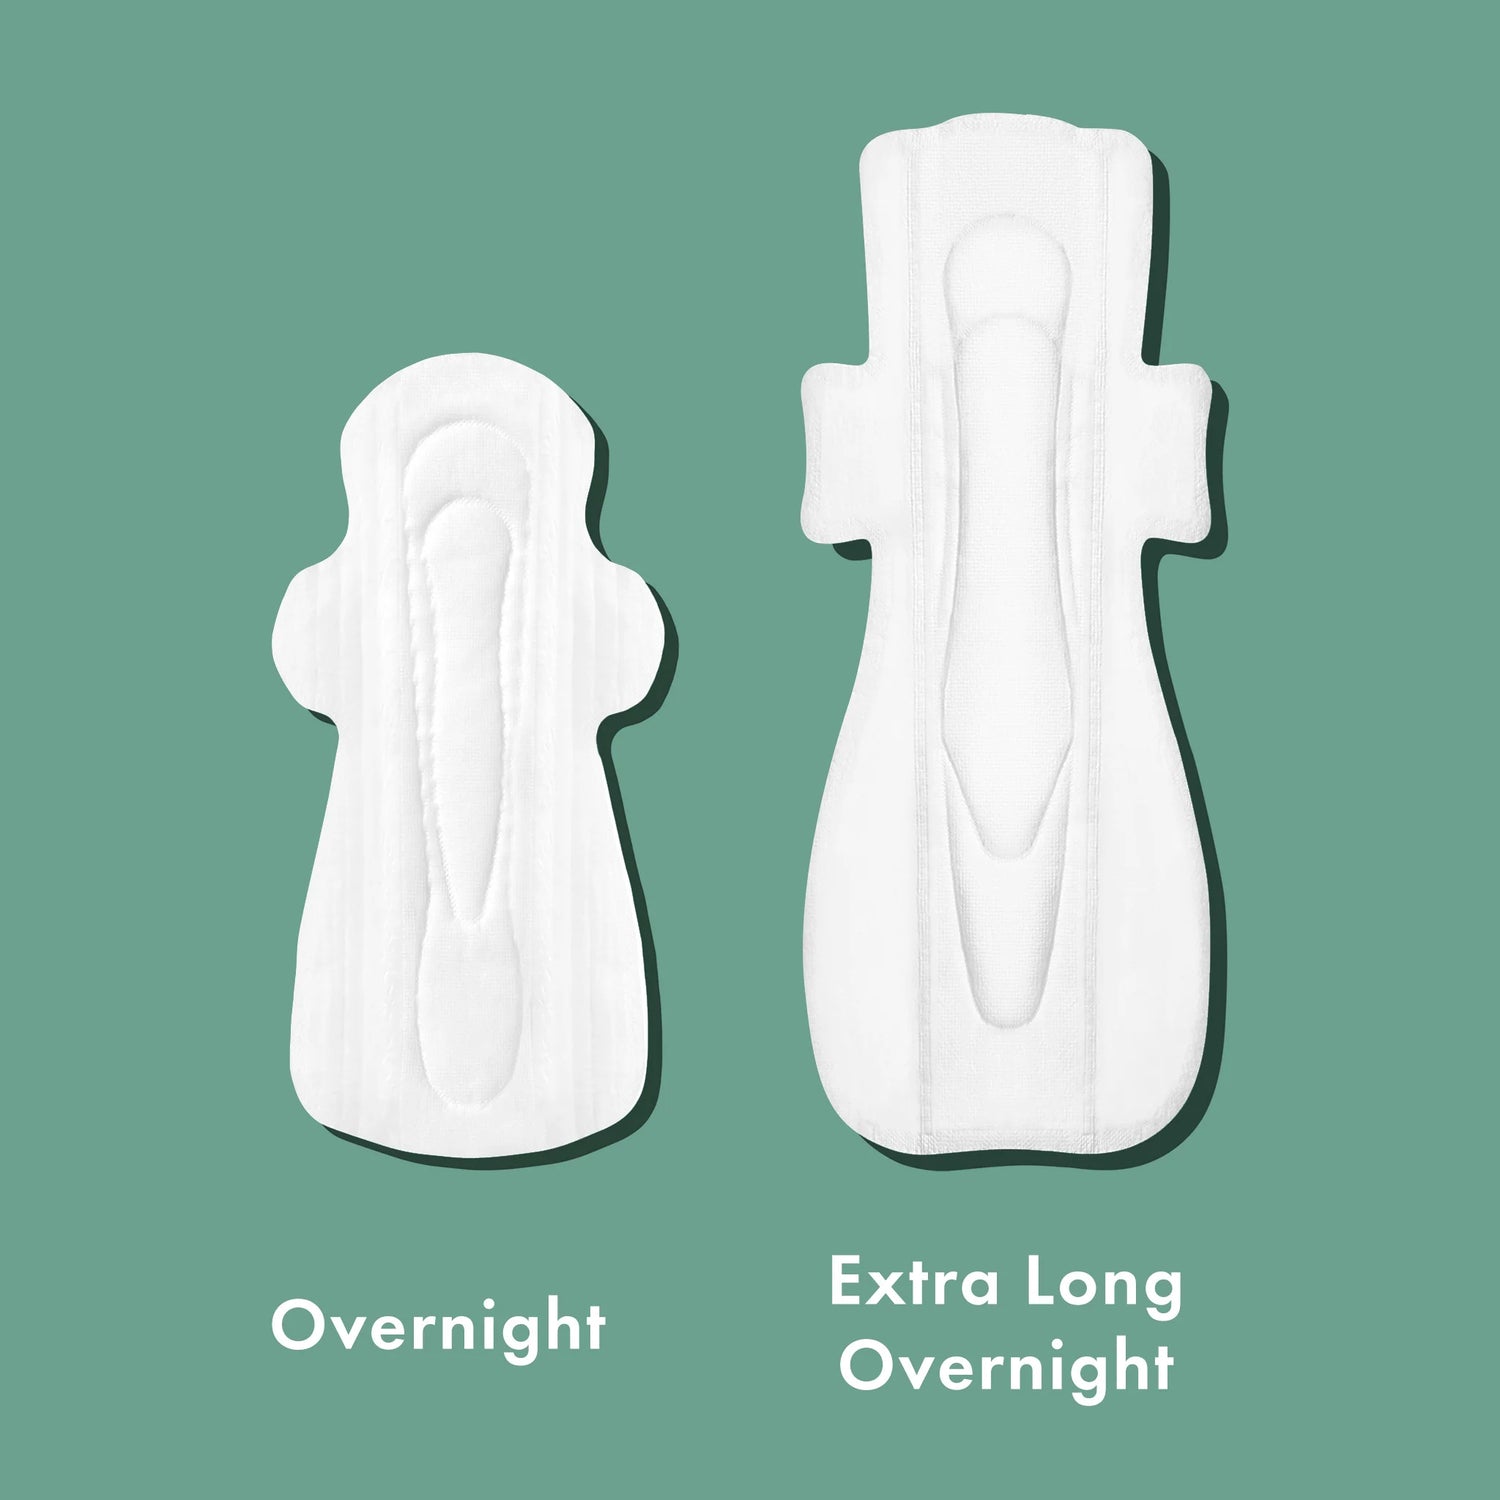 Rael Organic Cotton Cover Pads- Extra Long Overnight 6 pcs